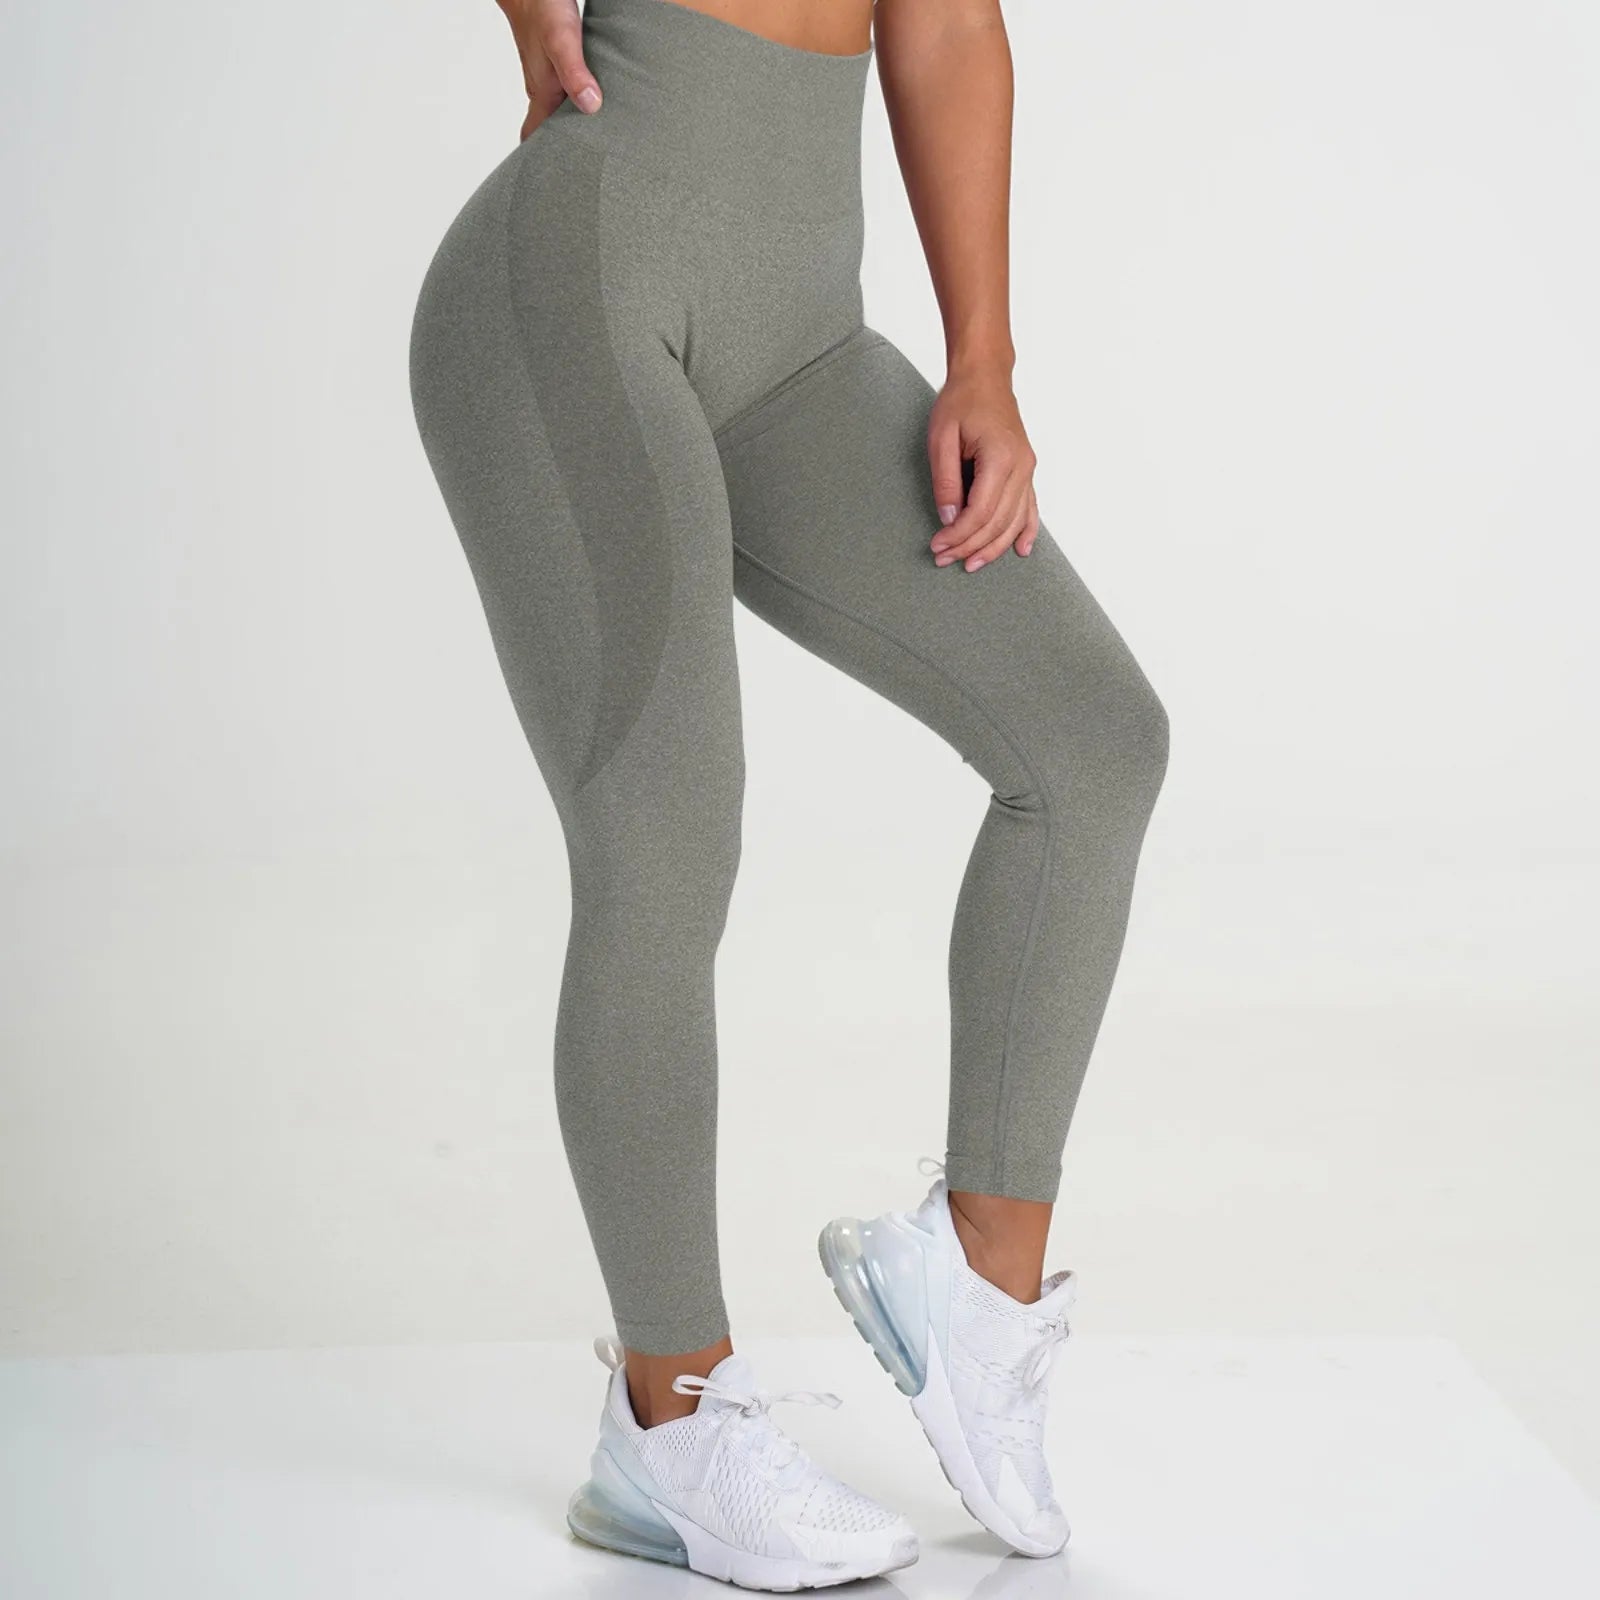 Seamless Leggings Women Sport Slim Shortstights Fitness High Waist Women Clothing Gym Workout Pants Female Pants Dropship